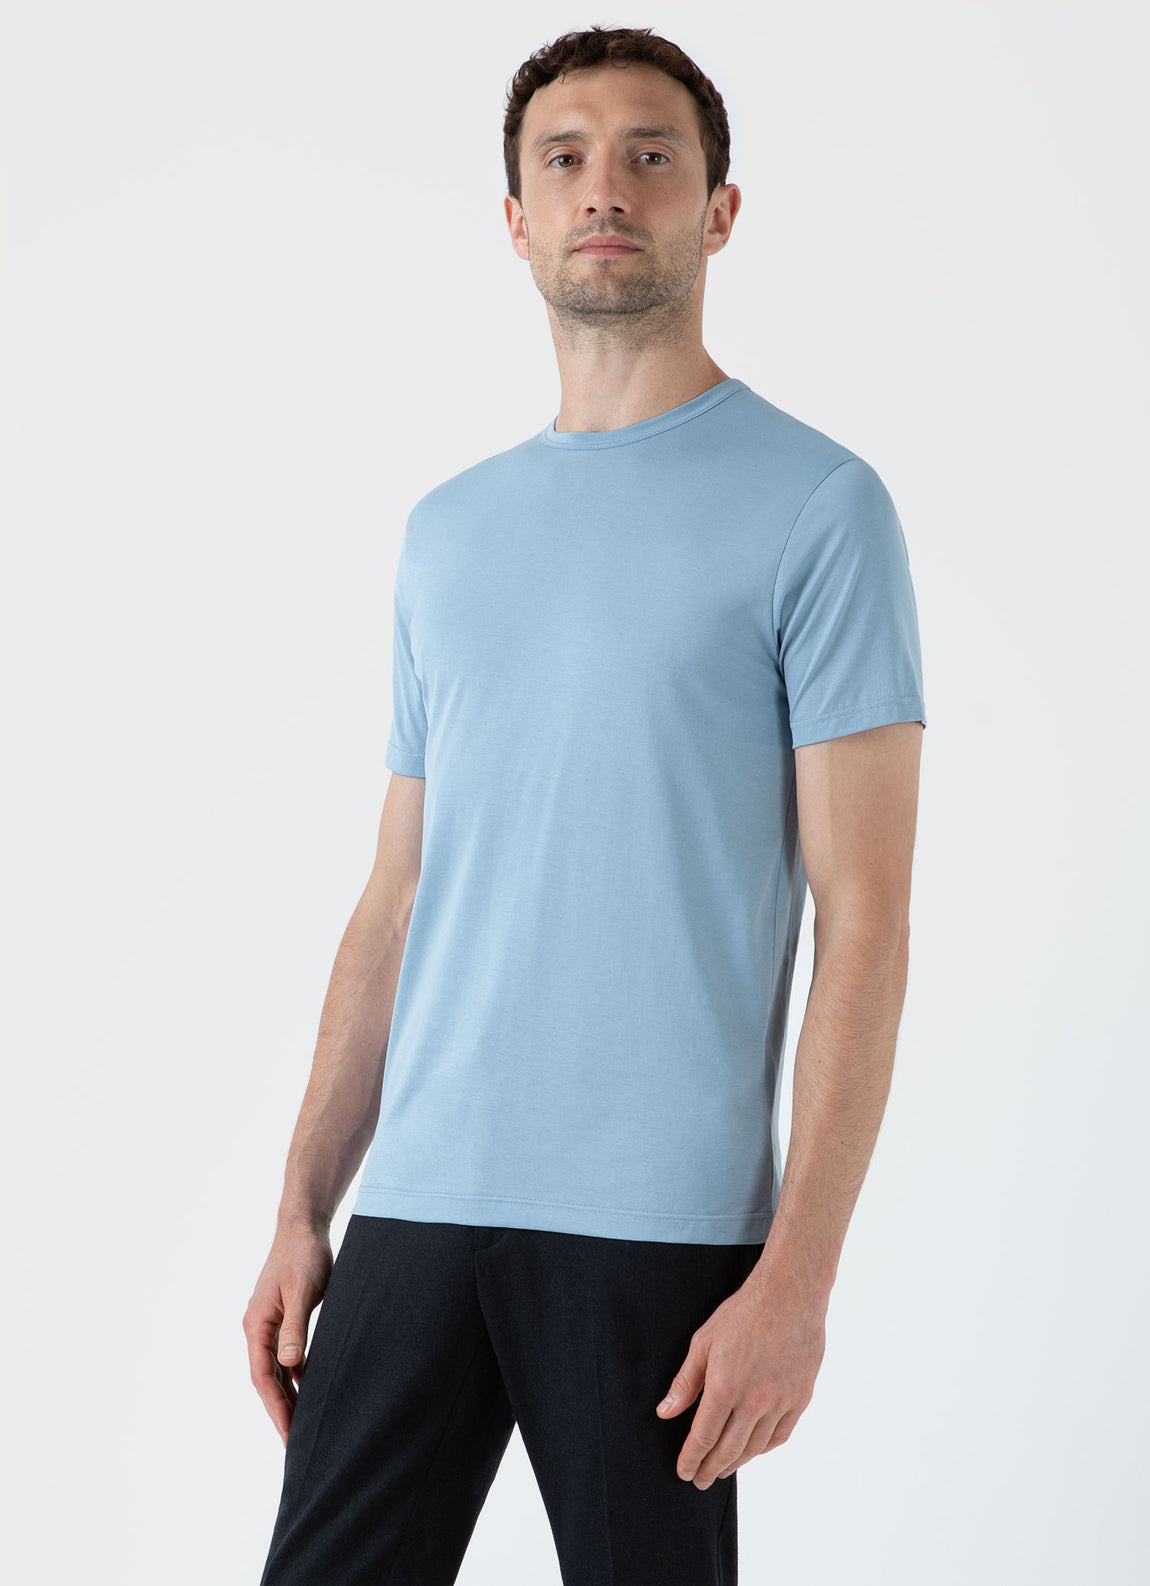 Men's Classic T-shirt in Sky Blue | Sunspel